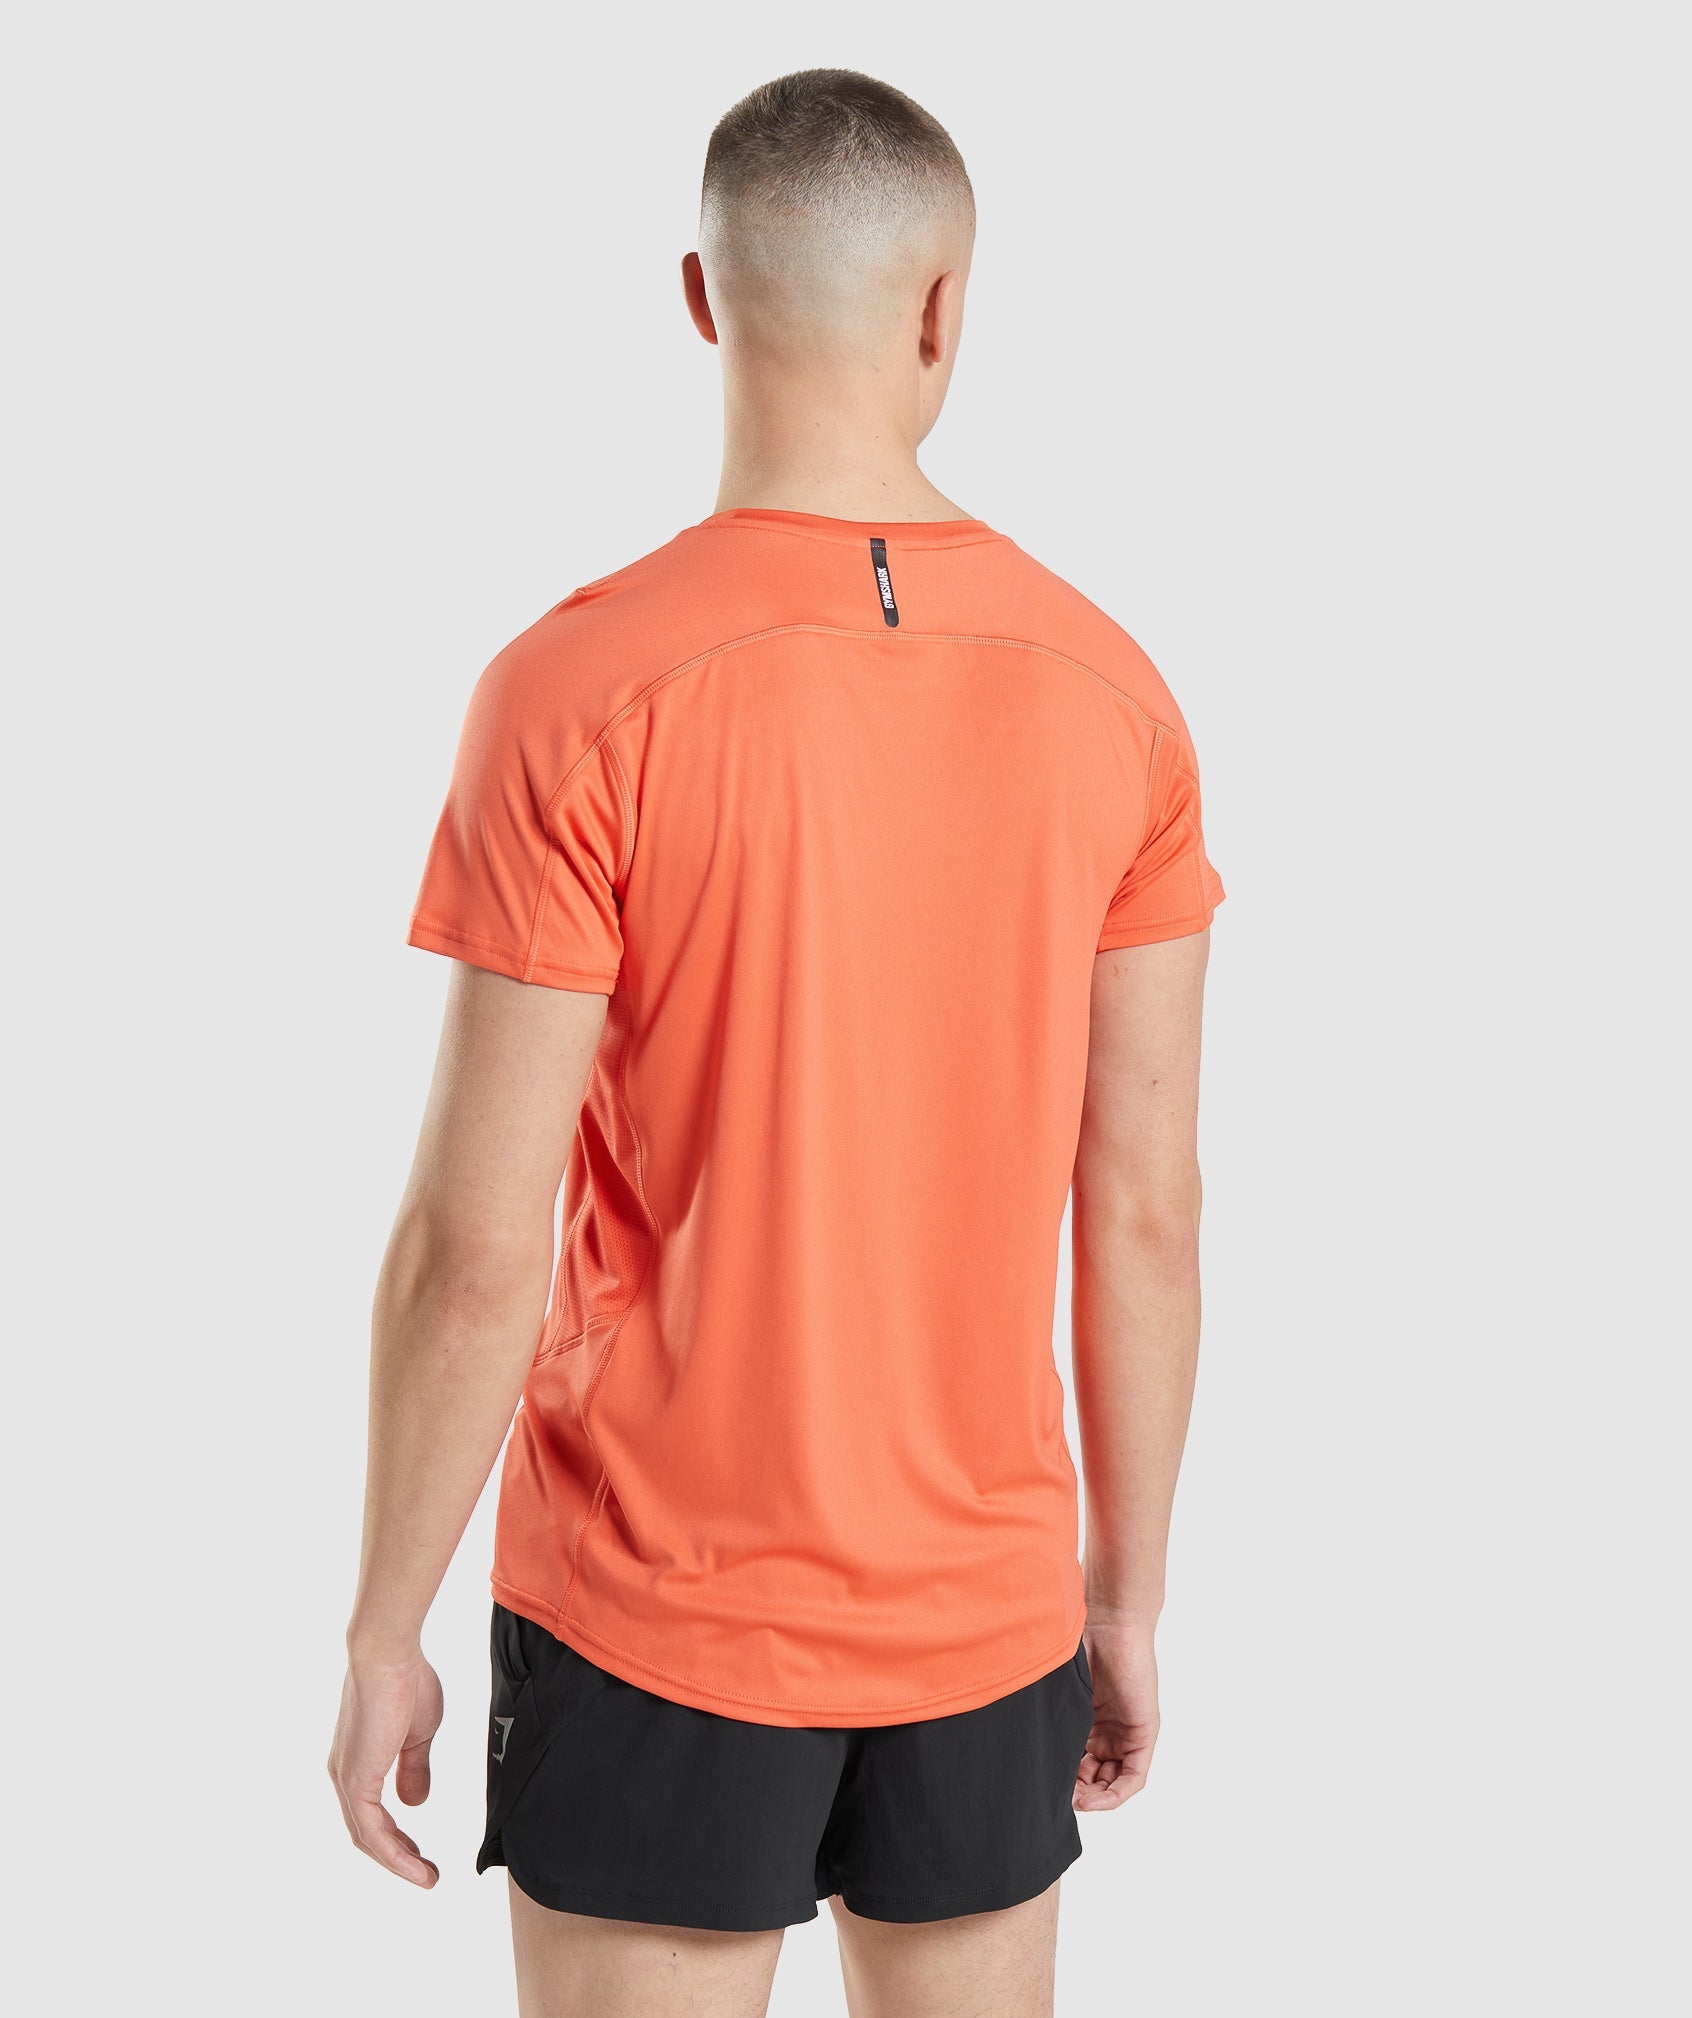 Gymshark Speed Tshirt Price: $265